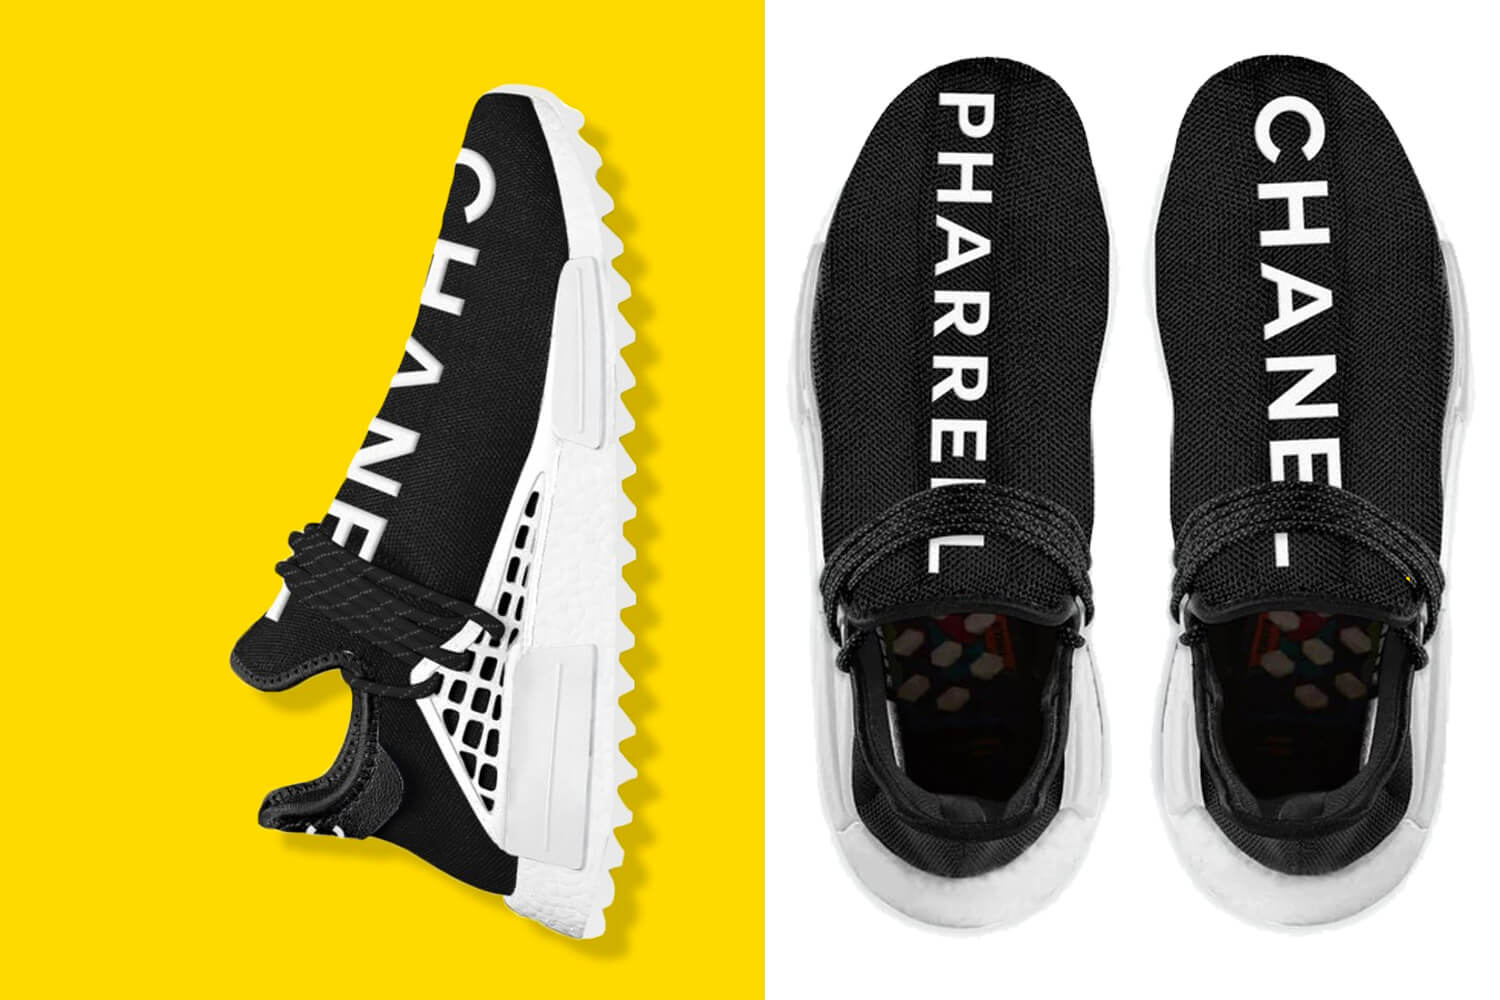 Chanel x Pharrell x Adidas NMD sneakers 